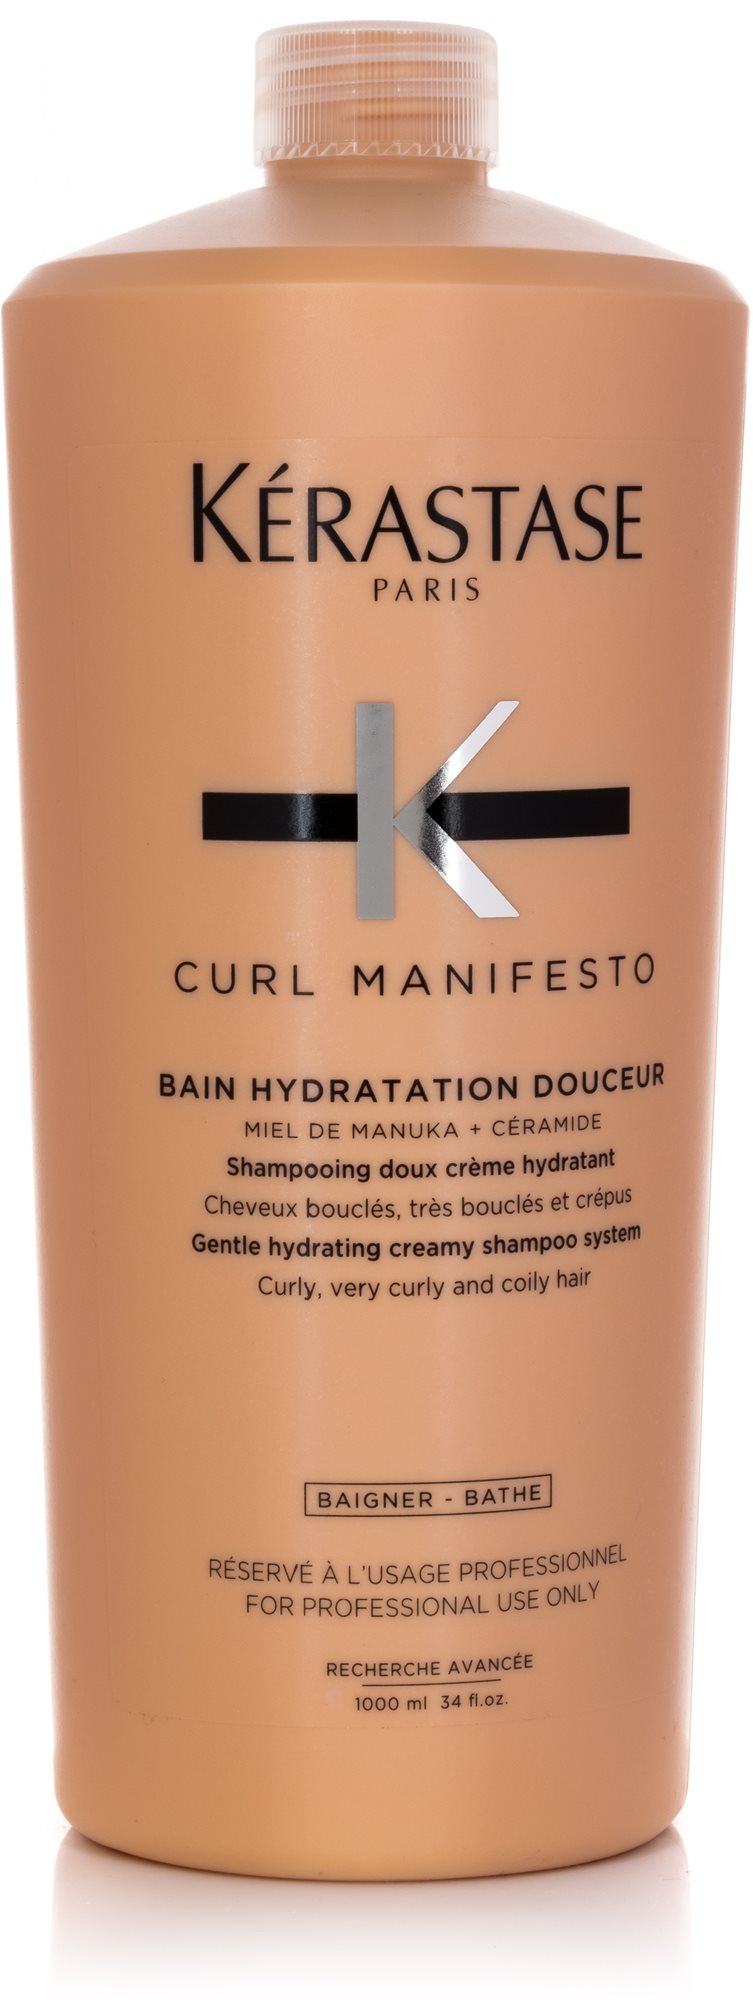 KÉRASTASE Curl Manifesto Bain Hydratation Douceur Shampoo 1000 ml